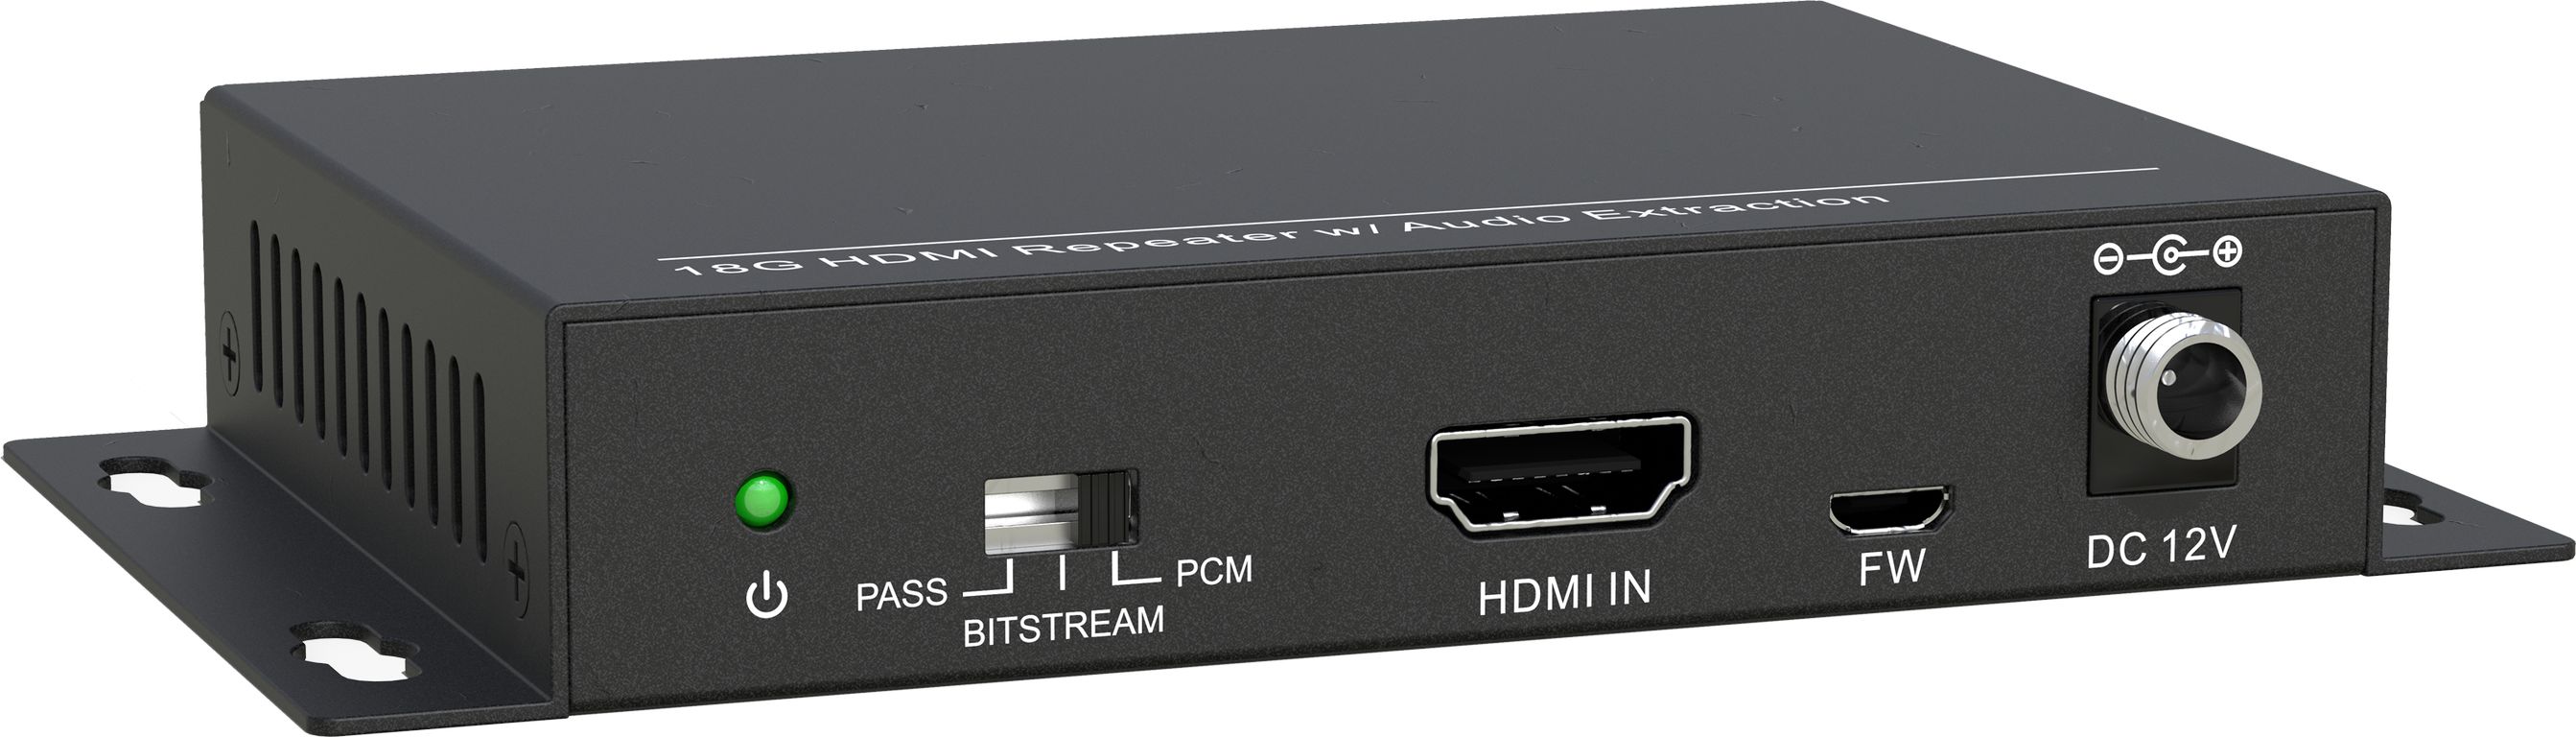 HDMI коммутаторы, разветвители, повторители Digis SS-AC1-4K2 hdmi коммутаторы разветвители повторители dr hd конвертер dr hd usb 3 0 в hdmi dr hd cv 113 uh